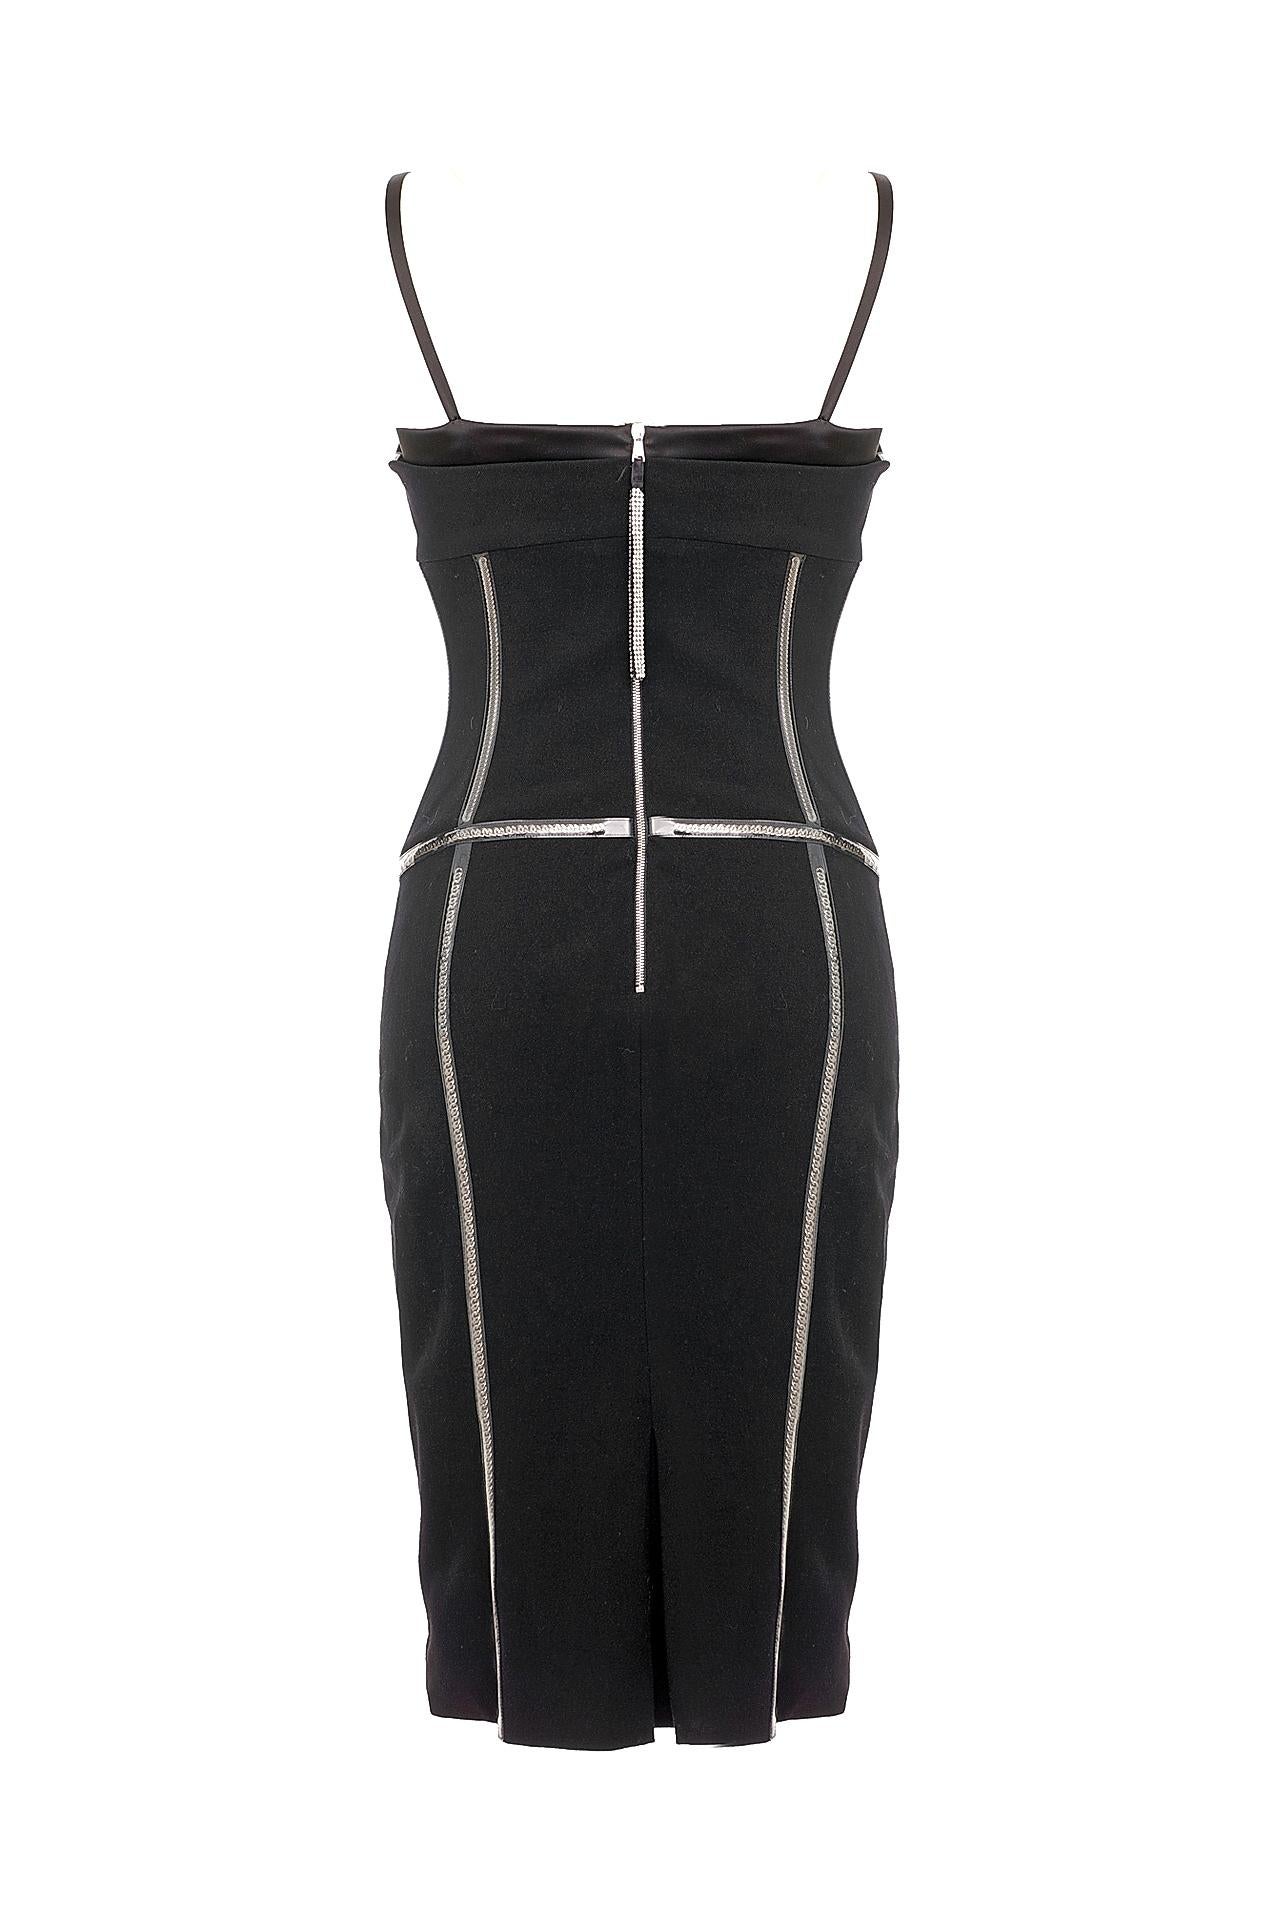 2007 Look #13 Dolce & Gabbana Chain Embellished Black Corset Dress 

IT Size 42 - US 6

Crystal zipper pull

New